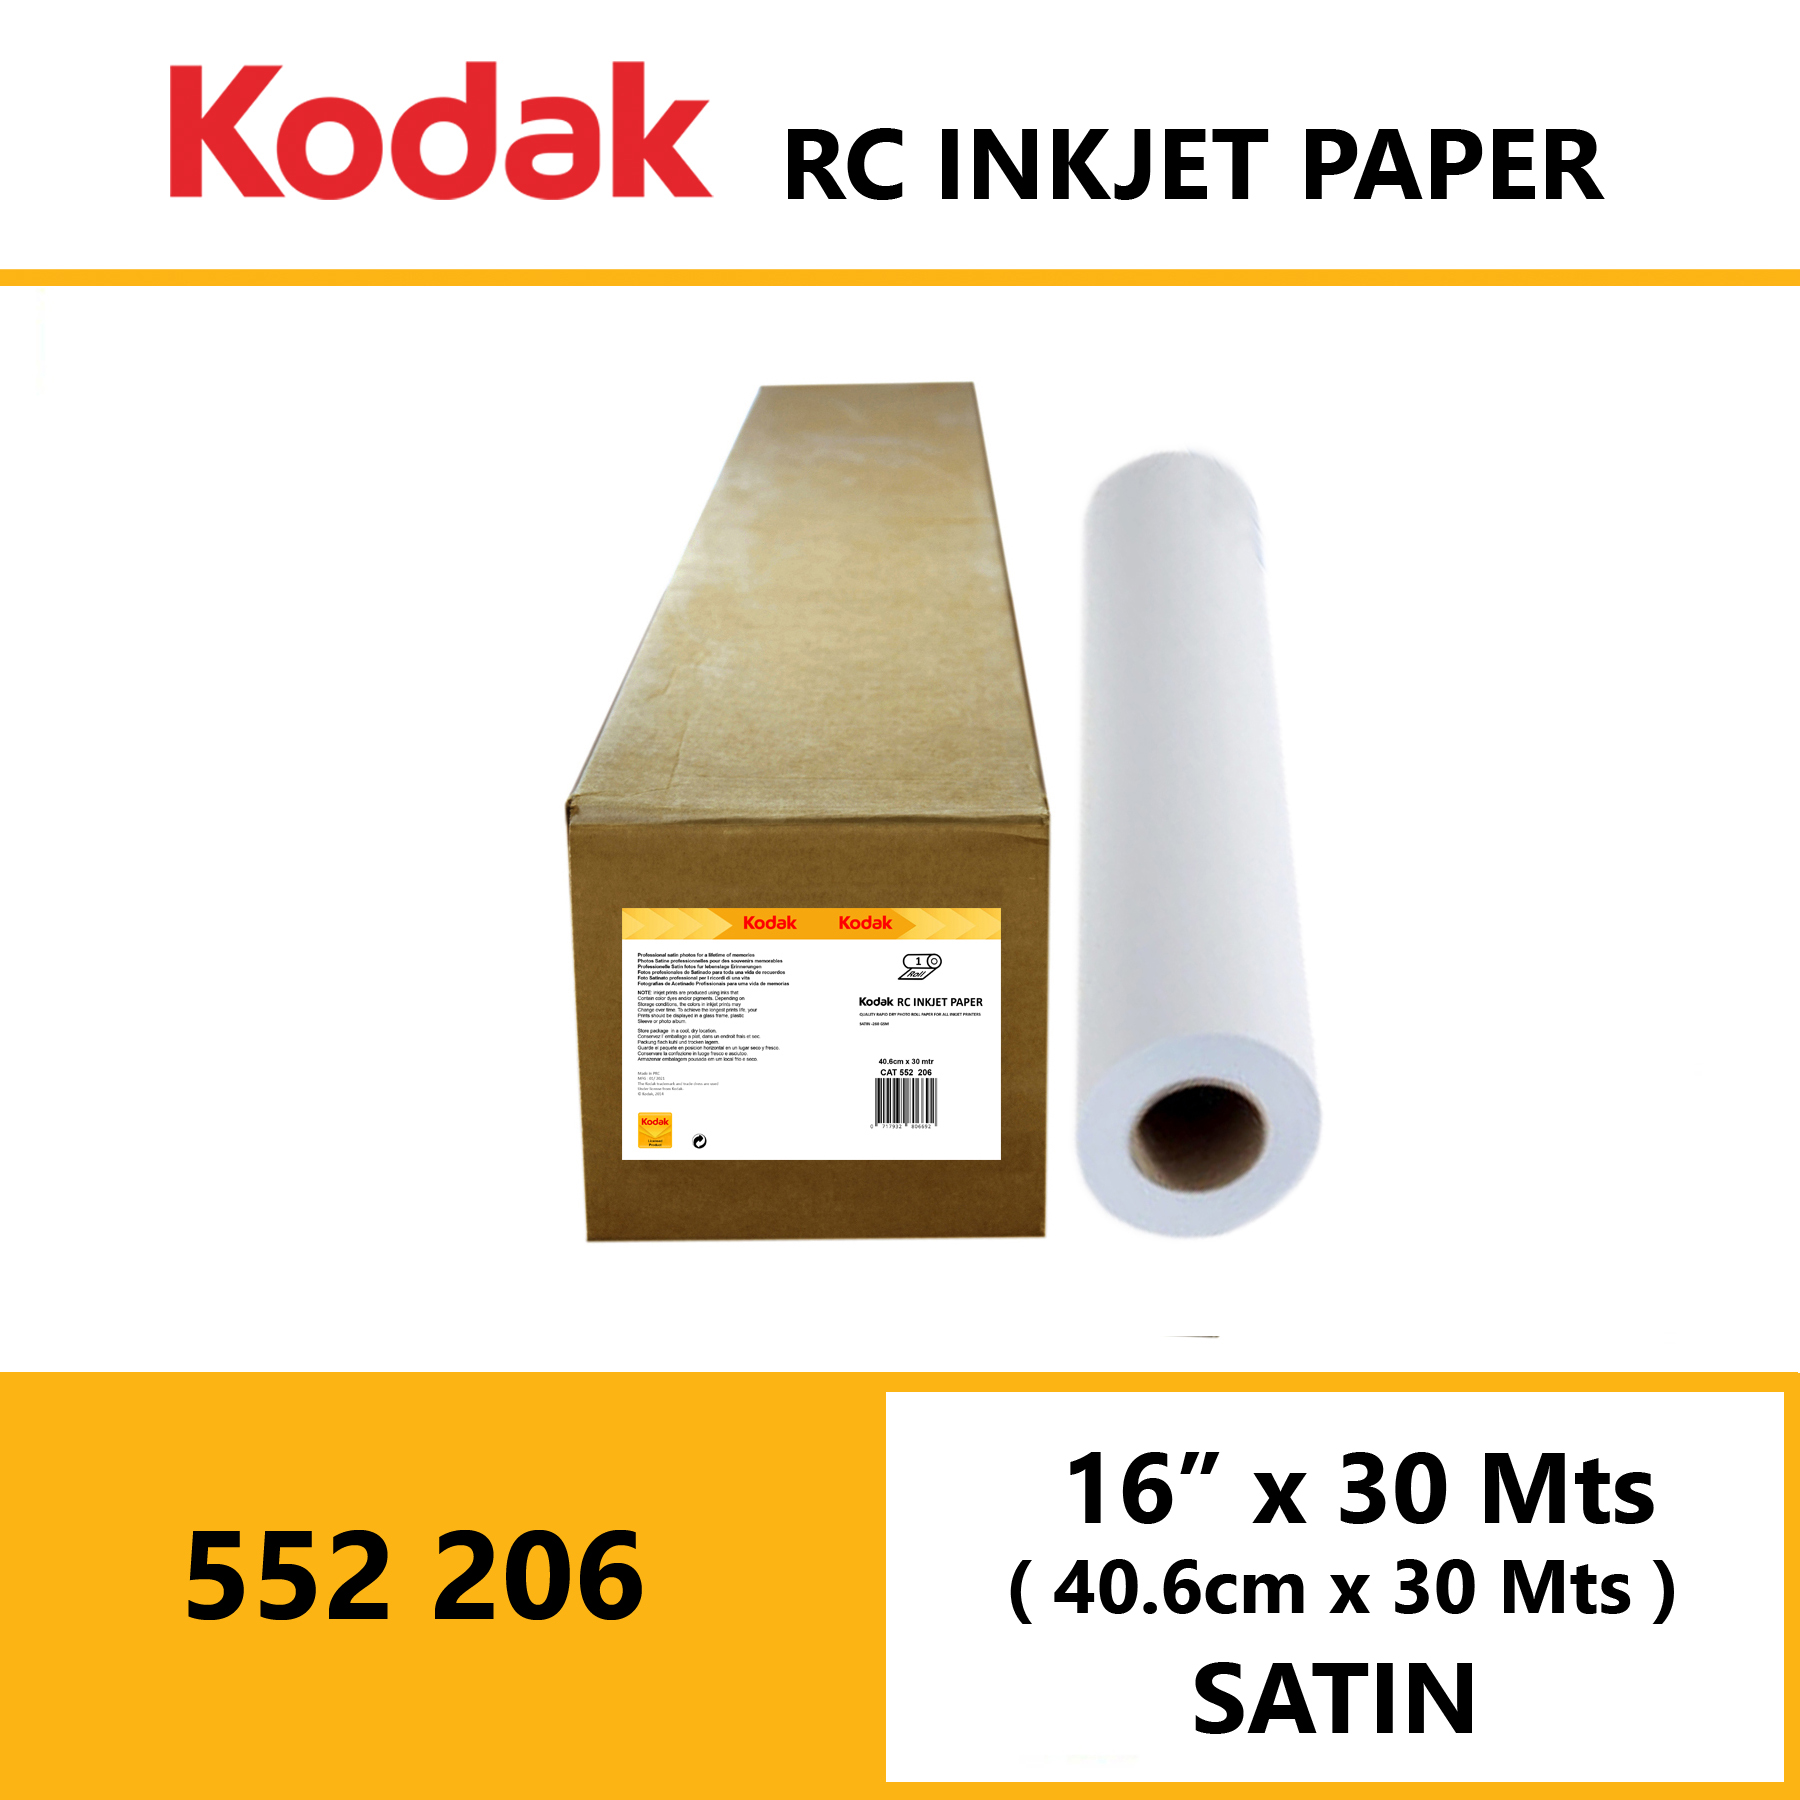 Kodak Inkjet RC Paper 16 ” x 30 Mtrs Satin